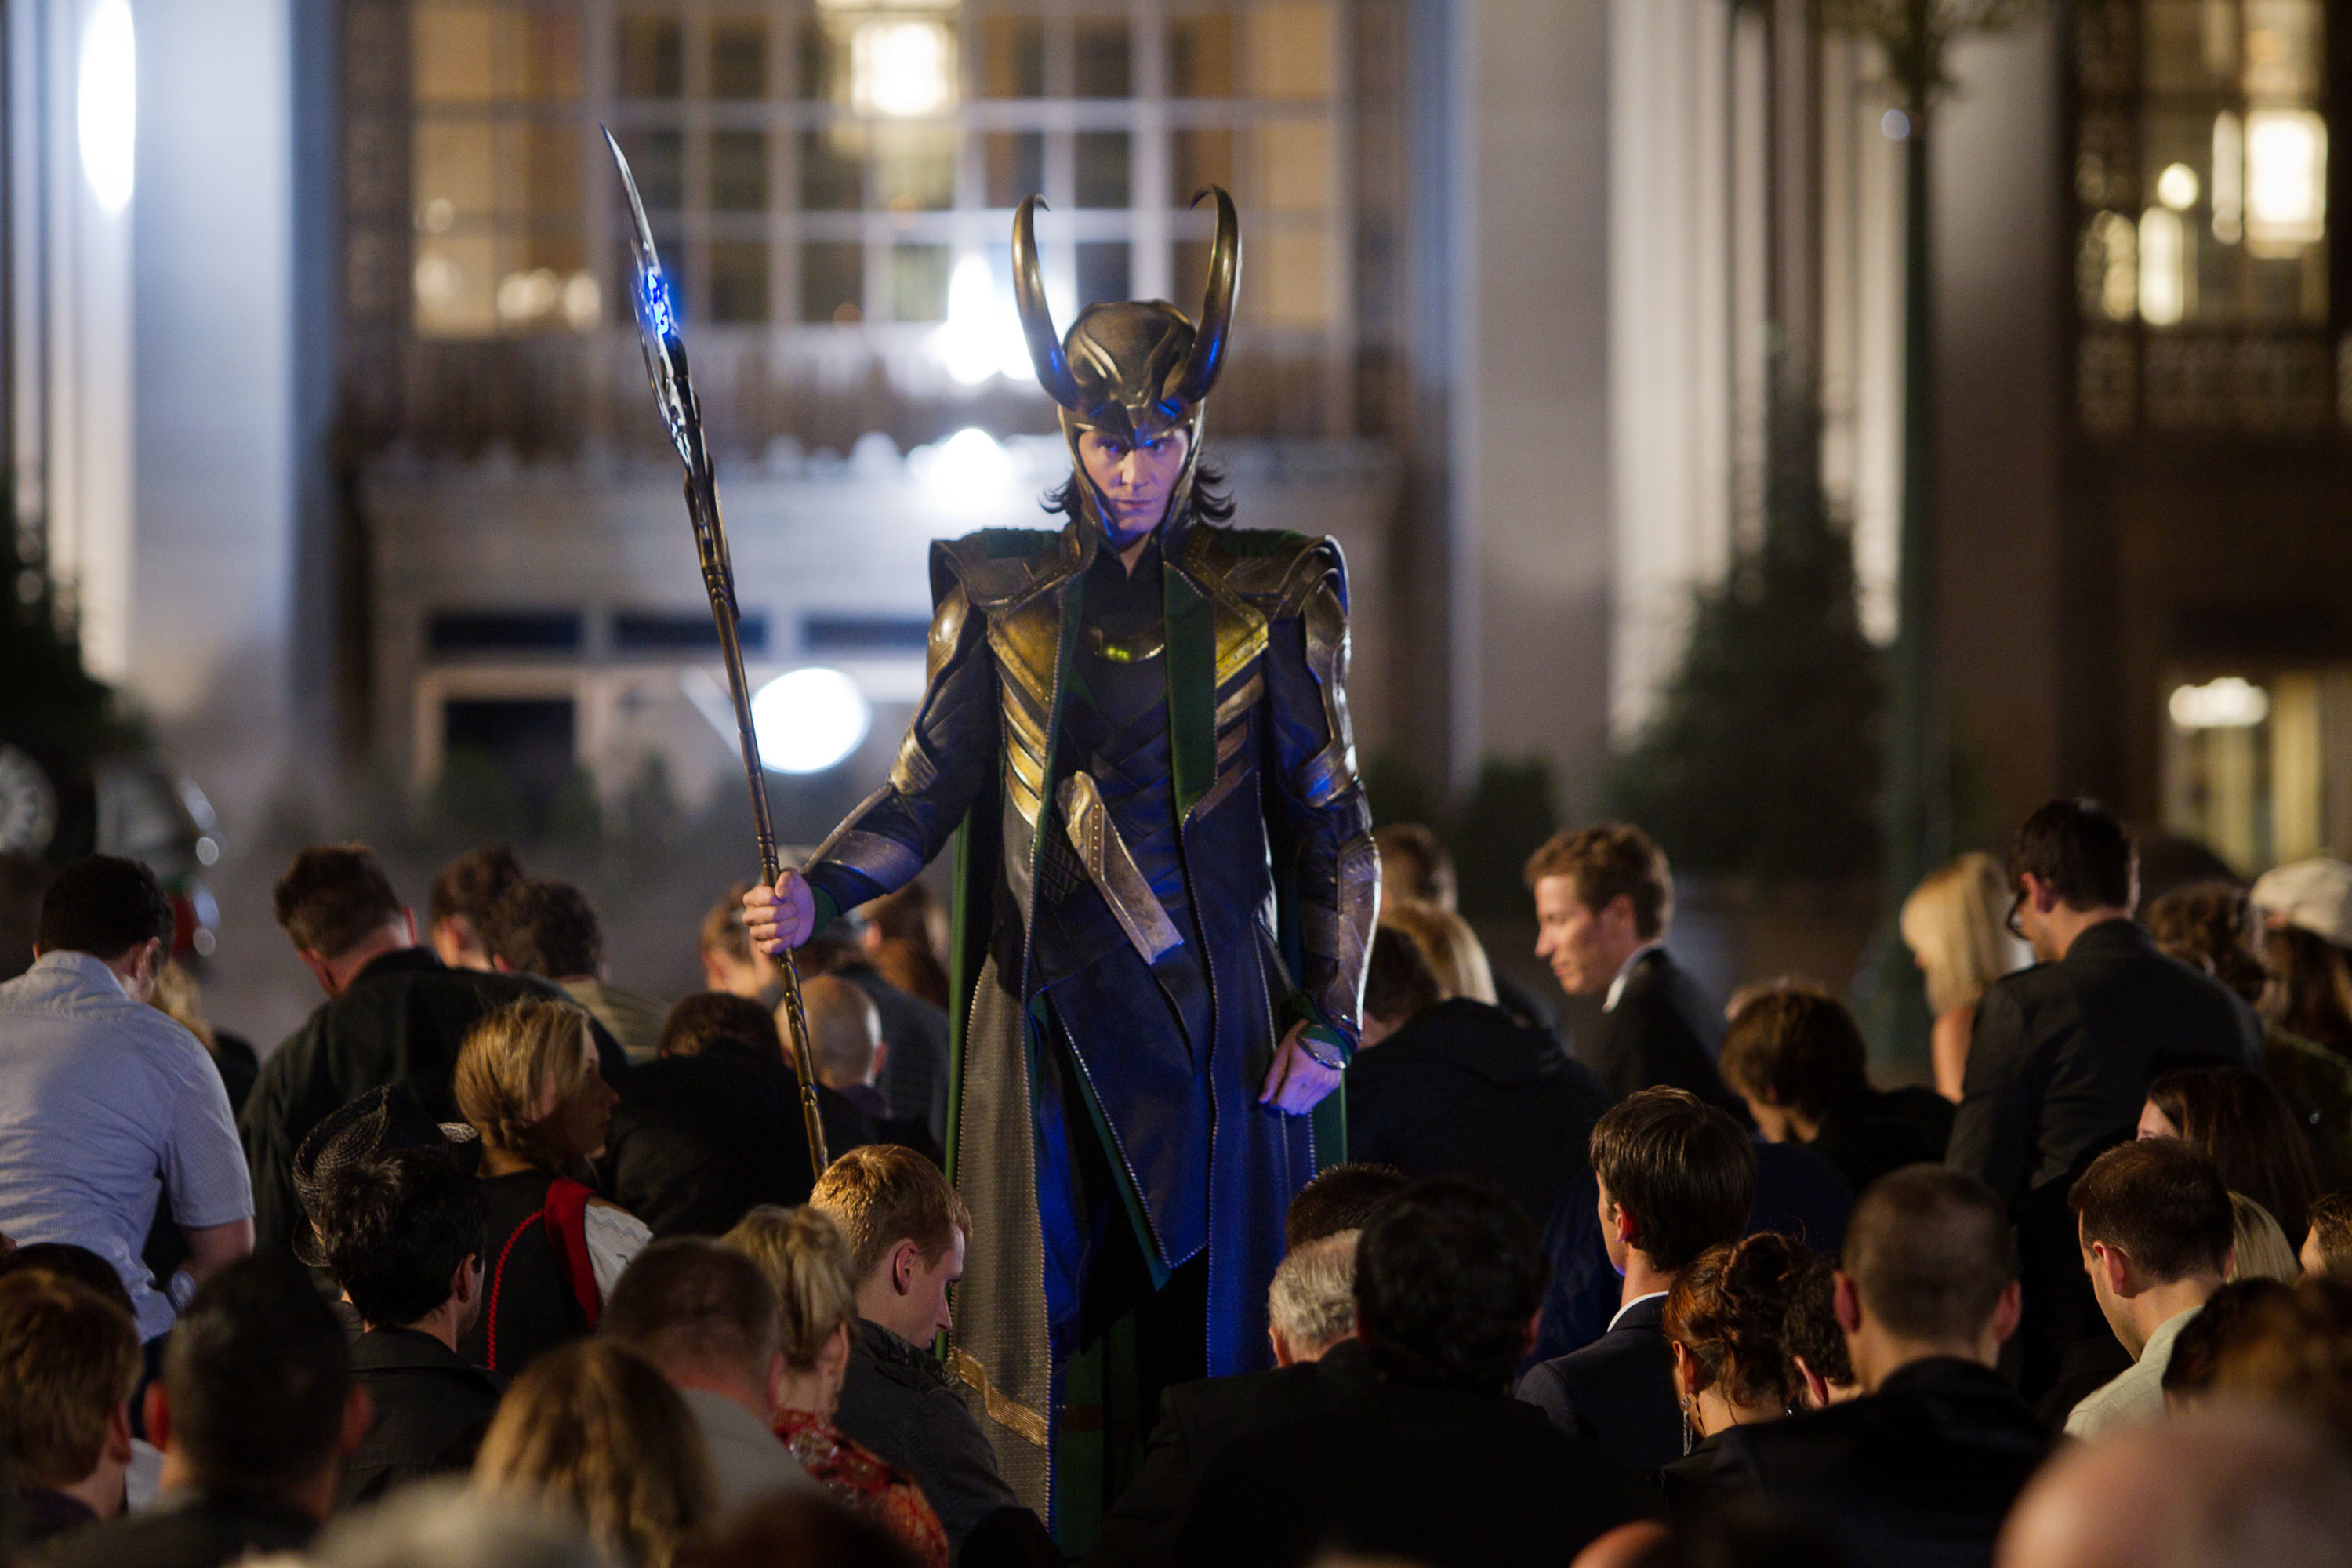 Loki holding his scepter and walking amongst kneeling people